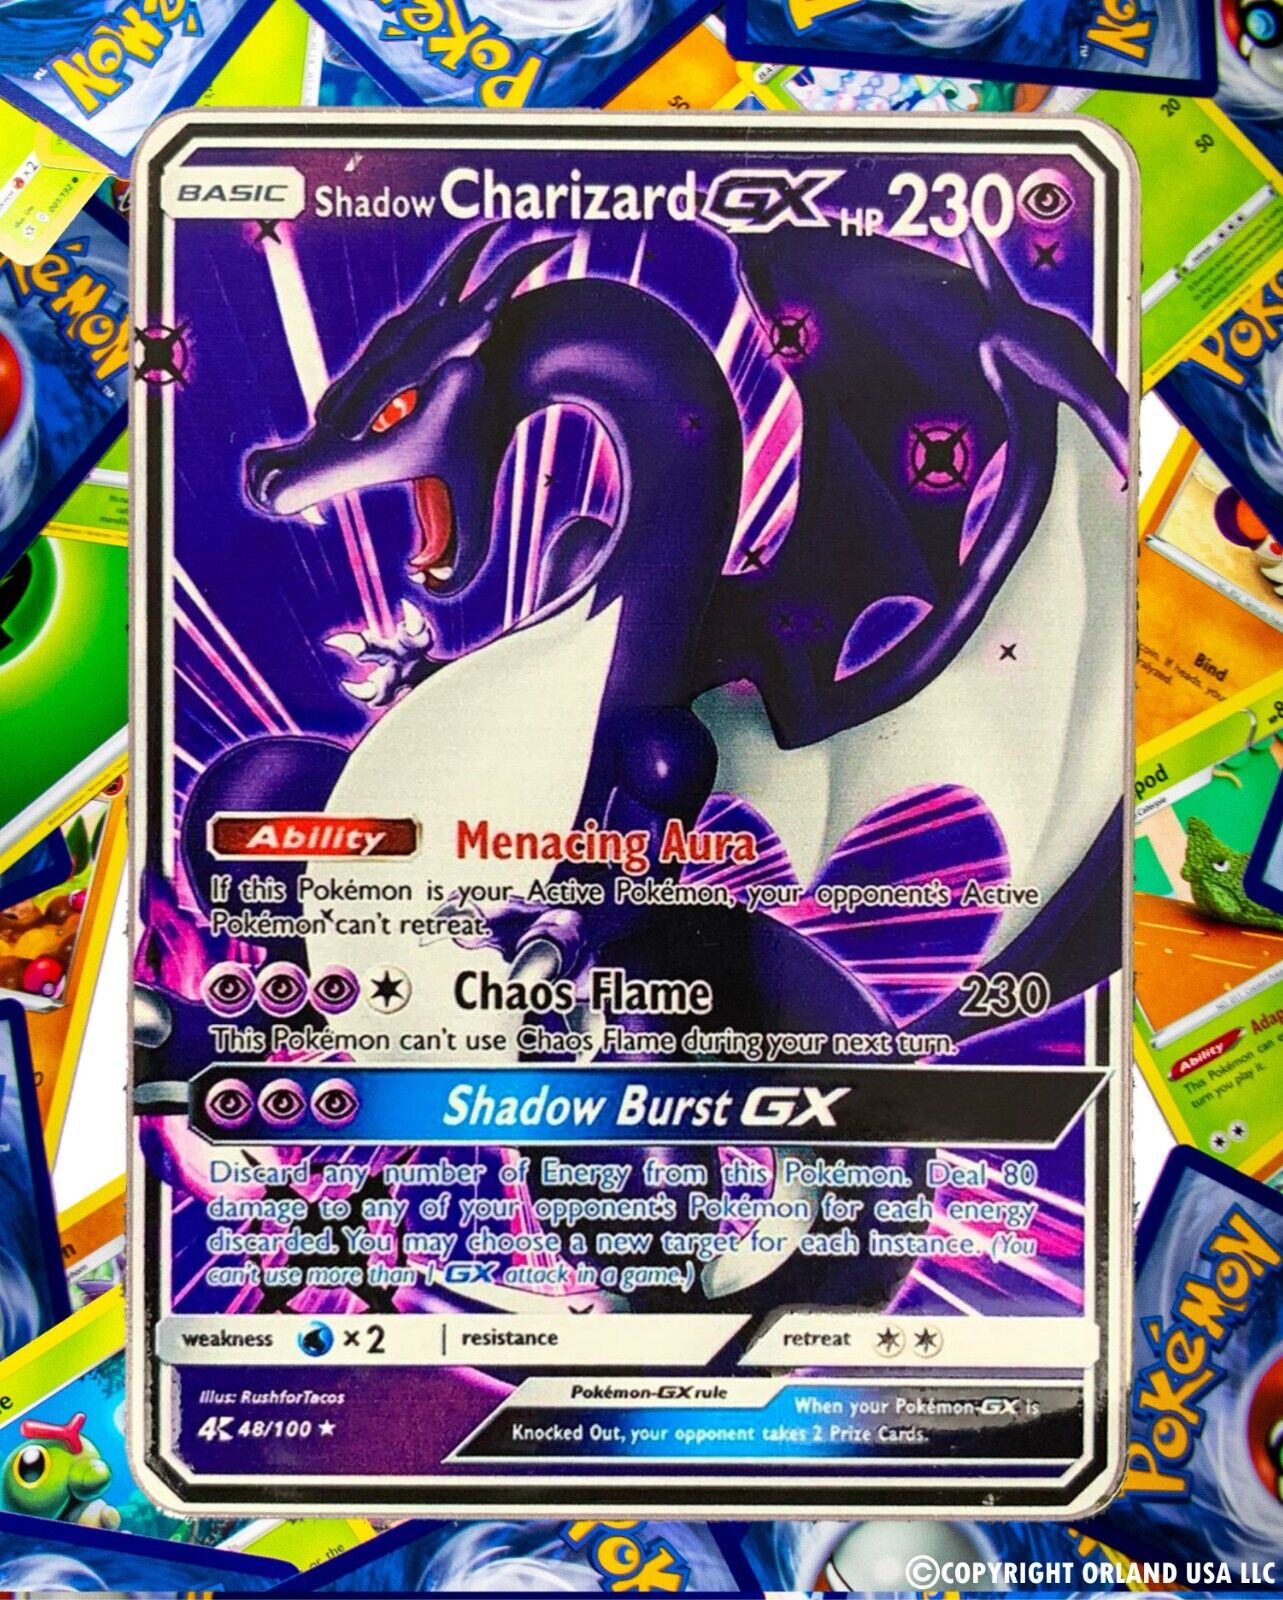 Shadow Charizard GX Rainbow Gold Metal Pokémon Card Collectible Gift